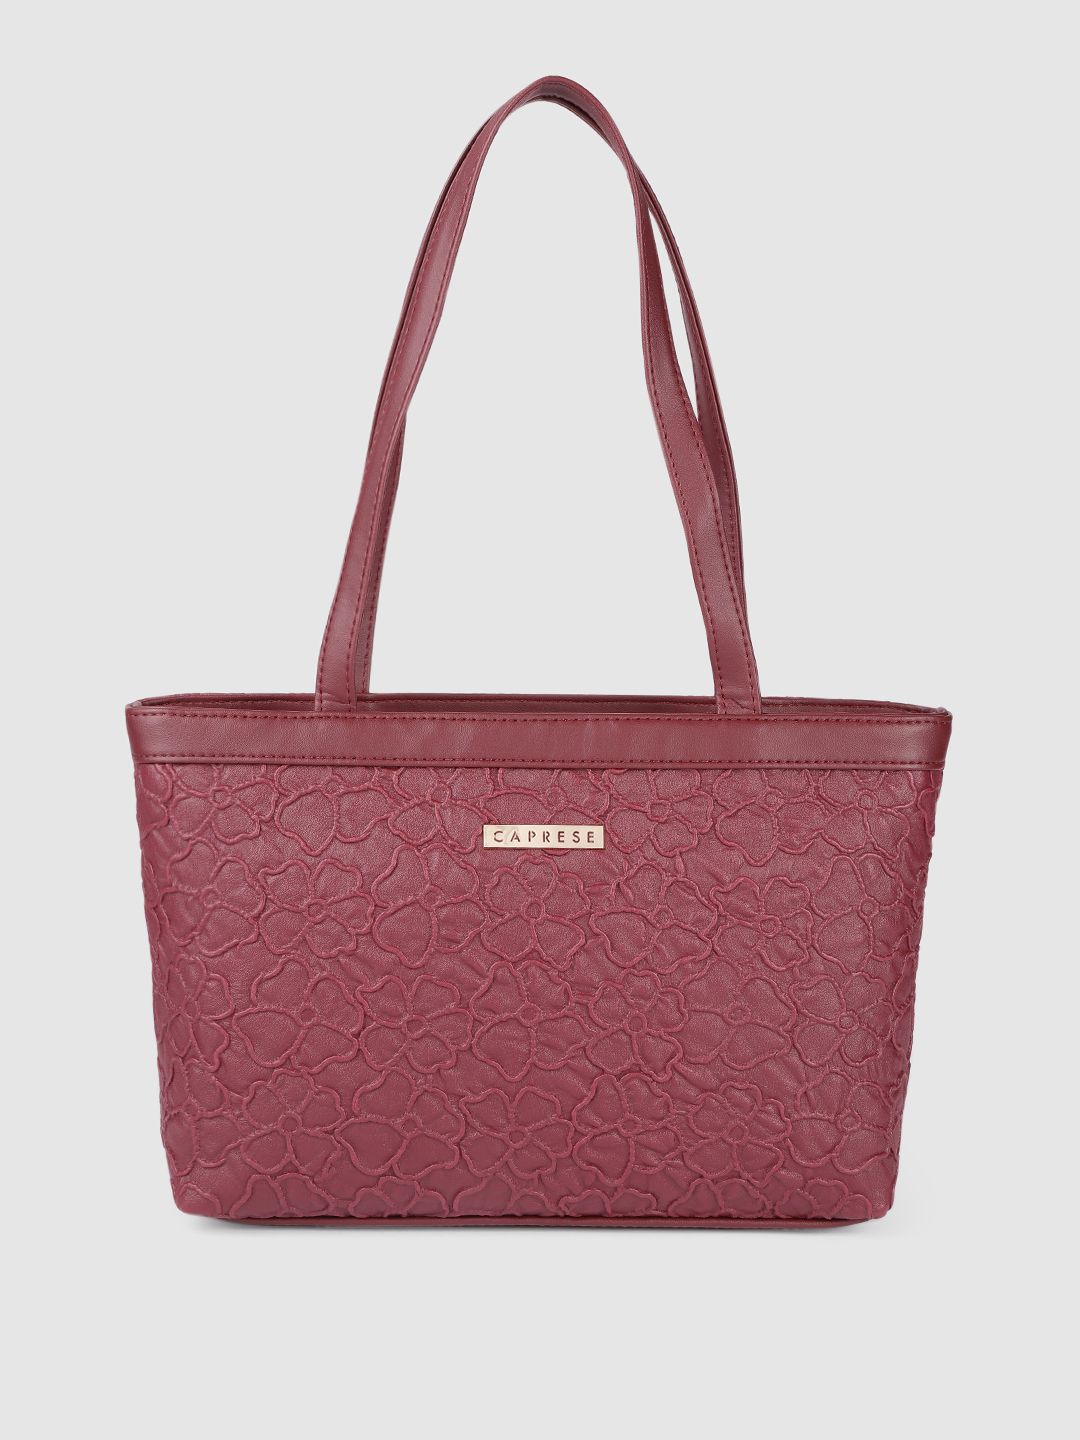 Caprese Maroon Floral Design Leather Shoulder Bag Price in India